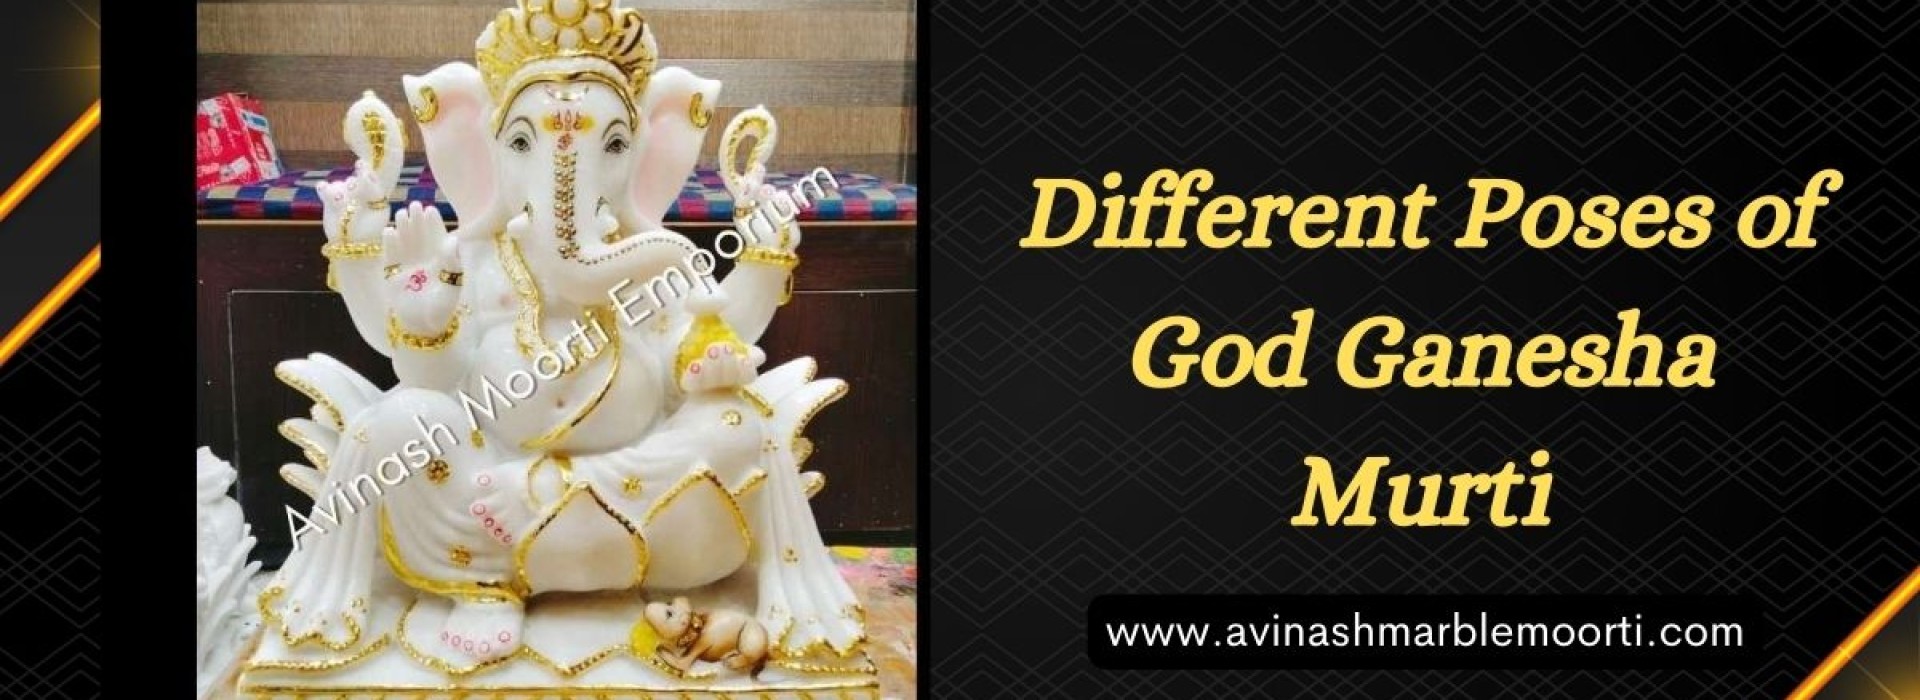 Different Poses of God Ganesha Murti